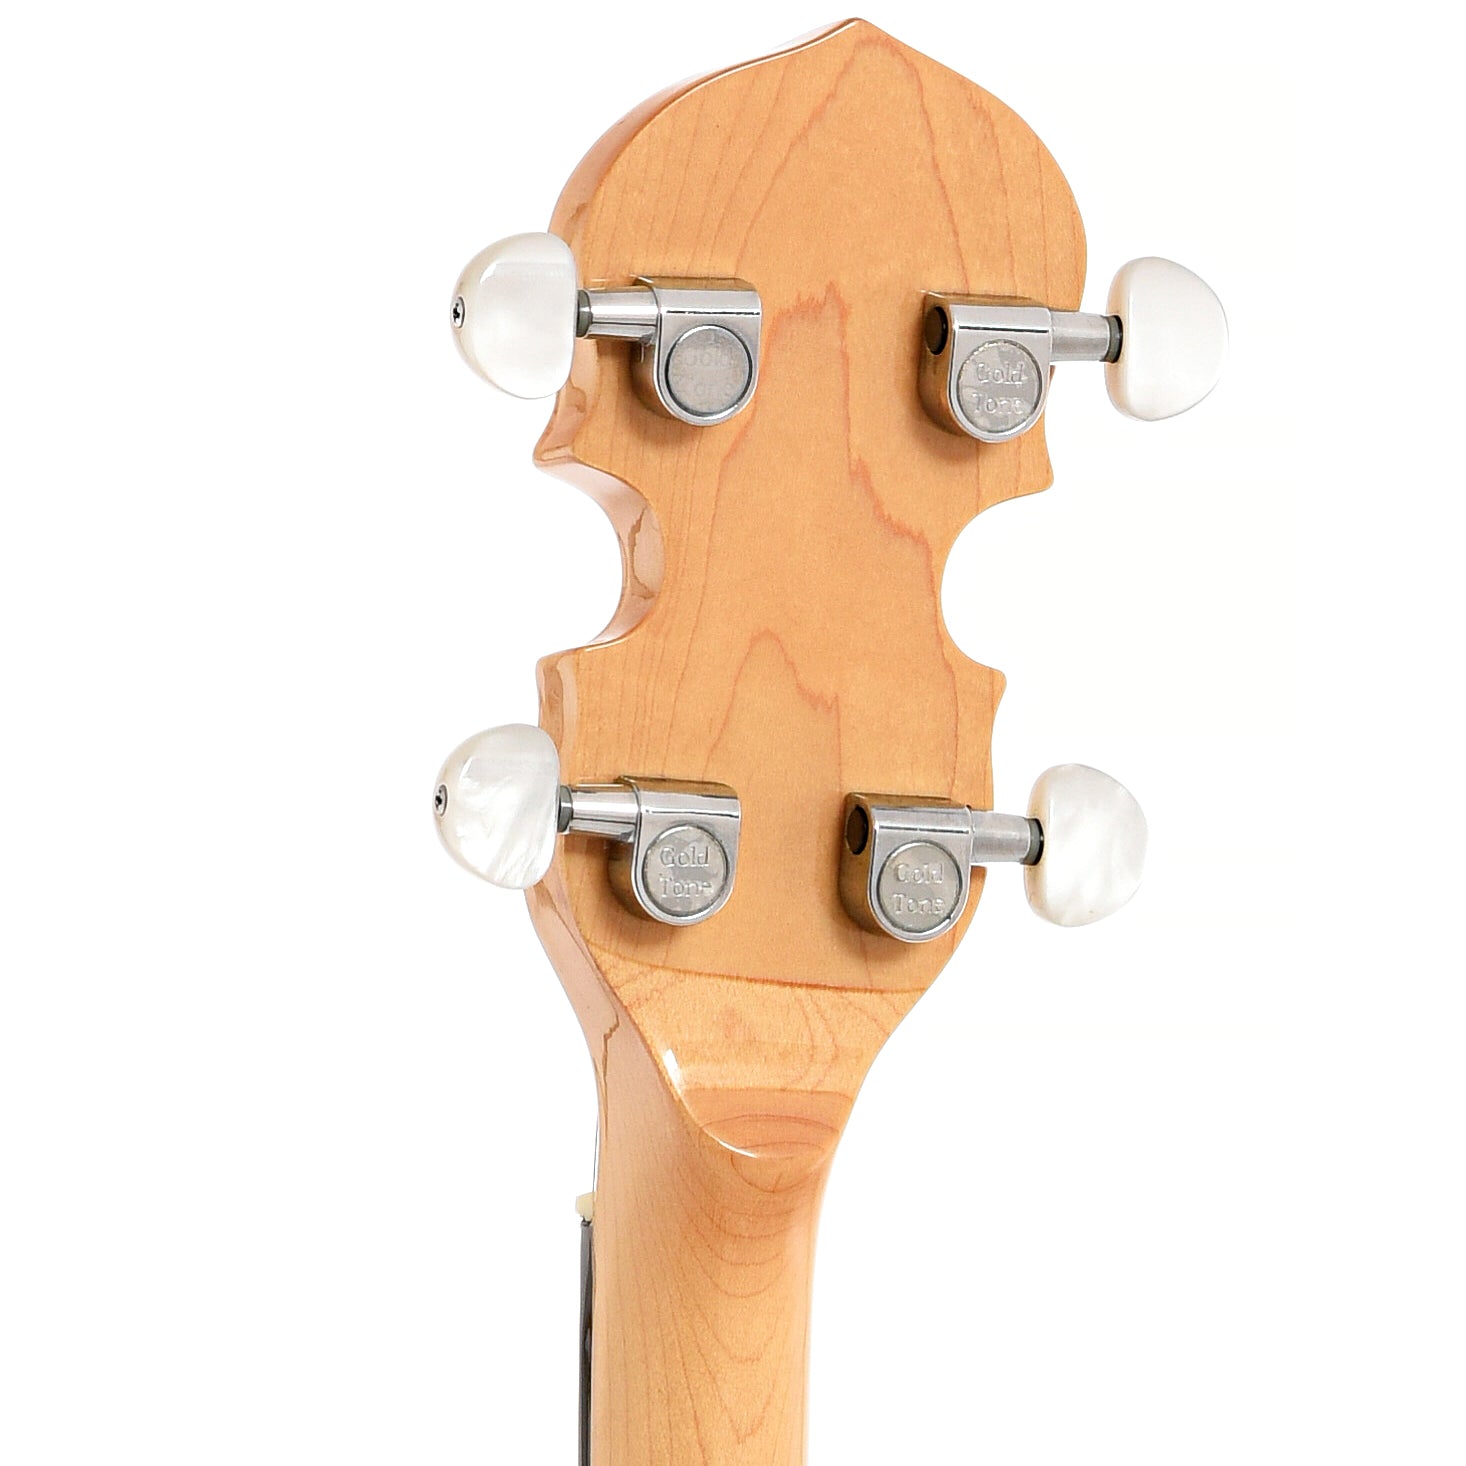 Back headstock of Gold Tone CC Plectrum Banjo